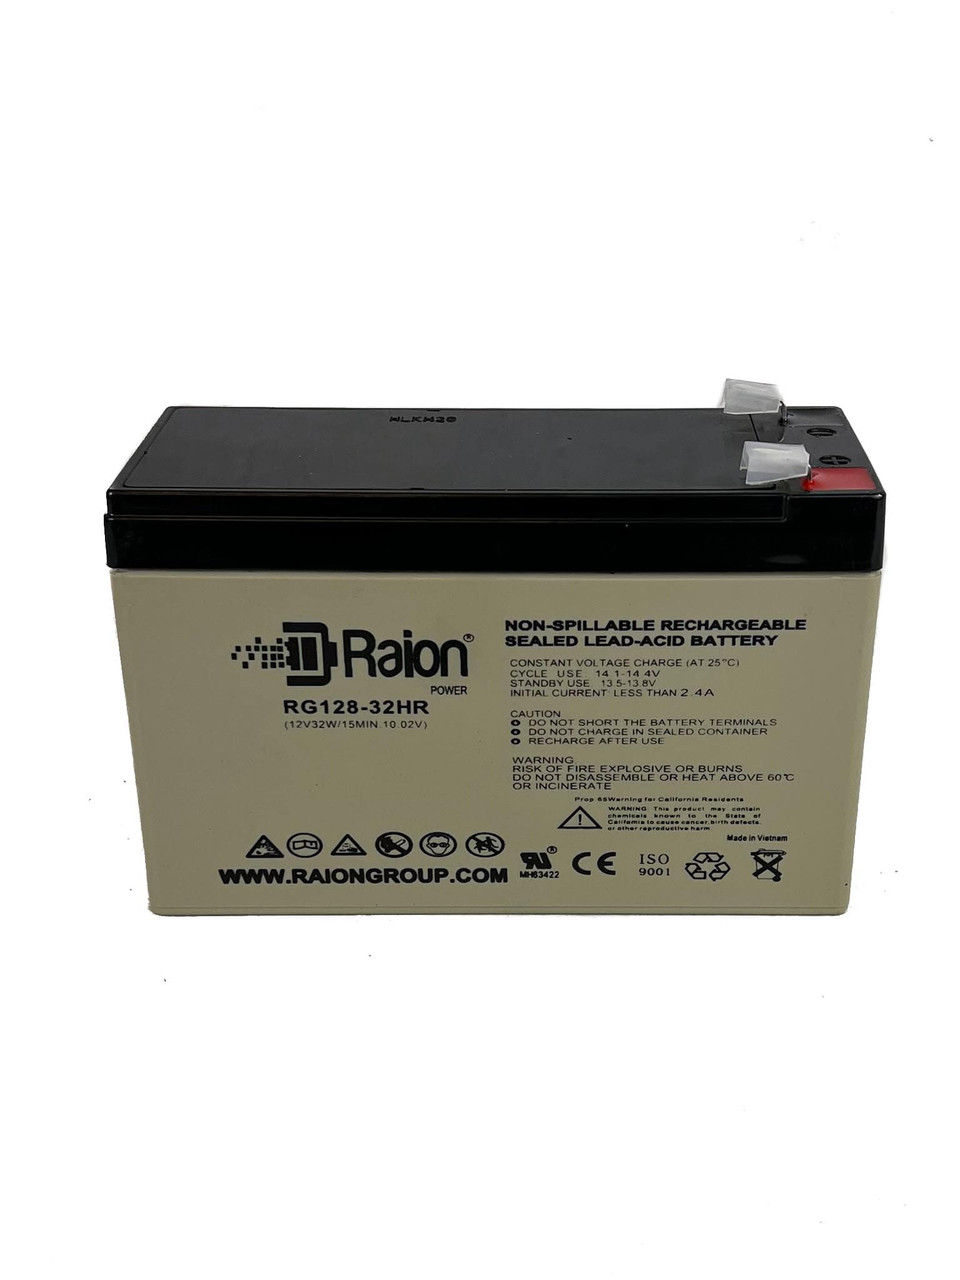 Raion Power RG128-32HR Replacement High Rate Battery Cartridge for Tripp Lite OMNISMART675NP